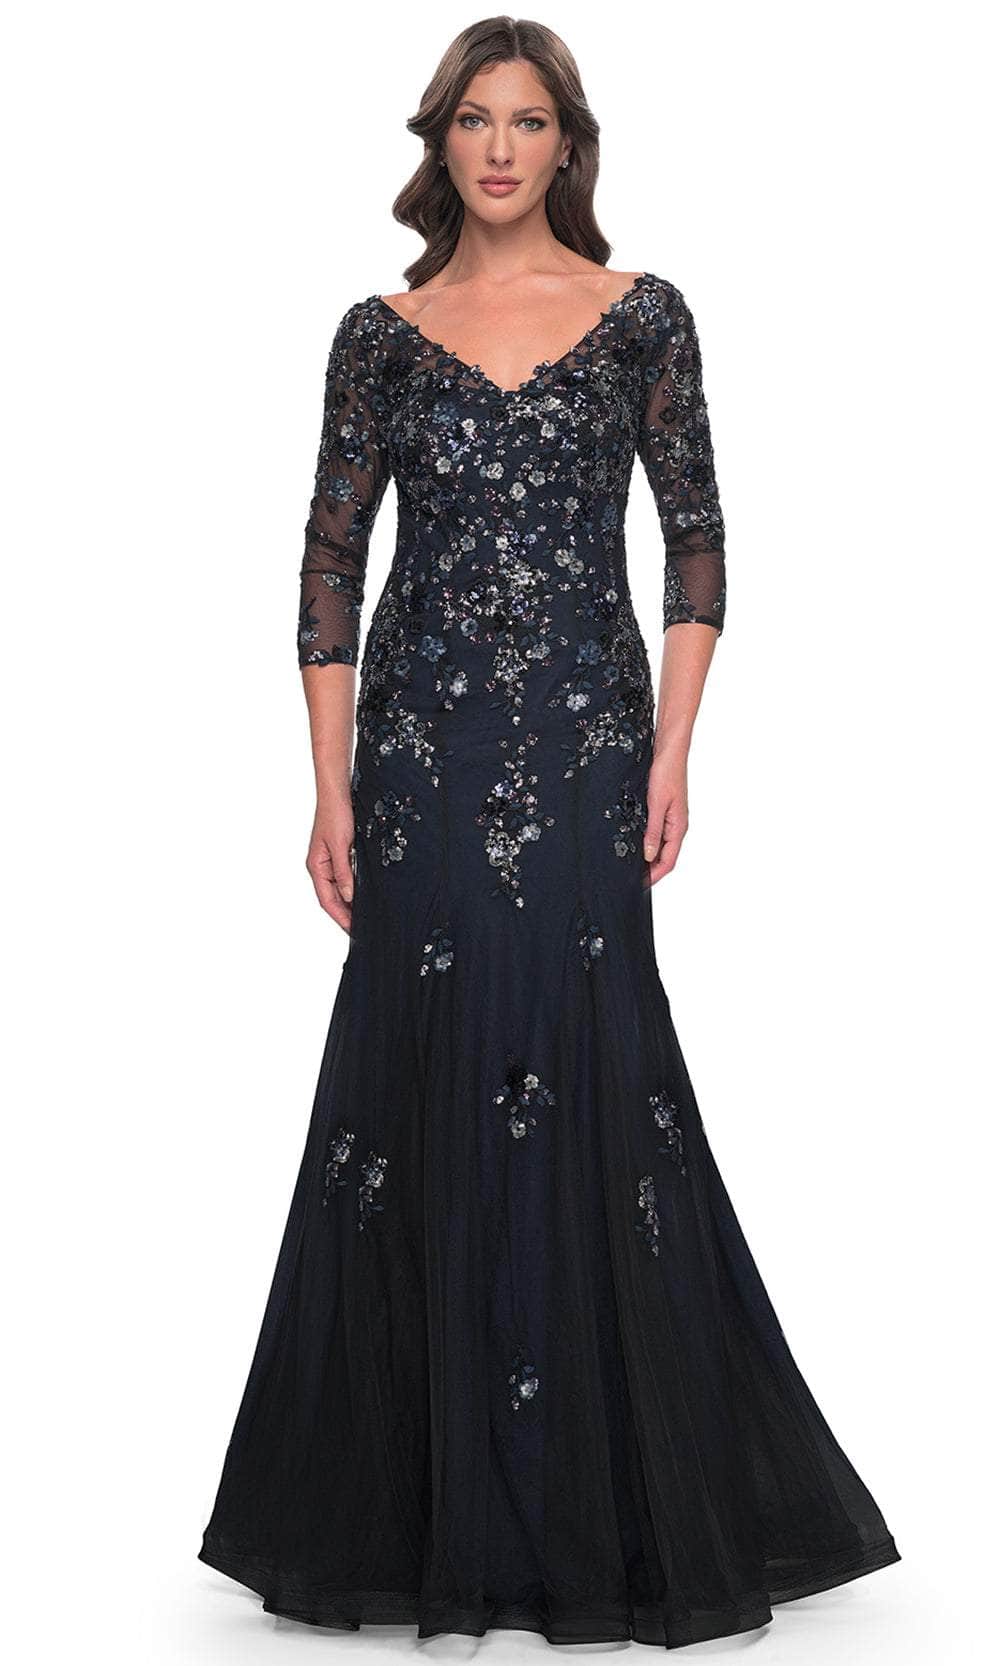 La Femme 30860 - Quarter Sleeve Mermaid Gown Mother of the Bride Dresses 4 / Black /Navy